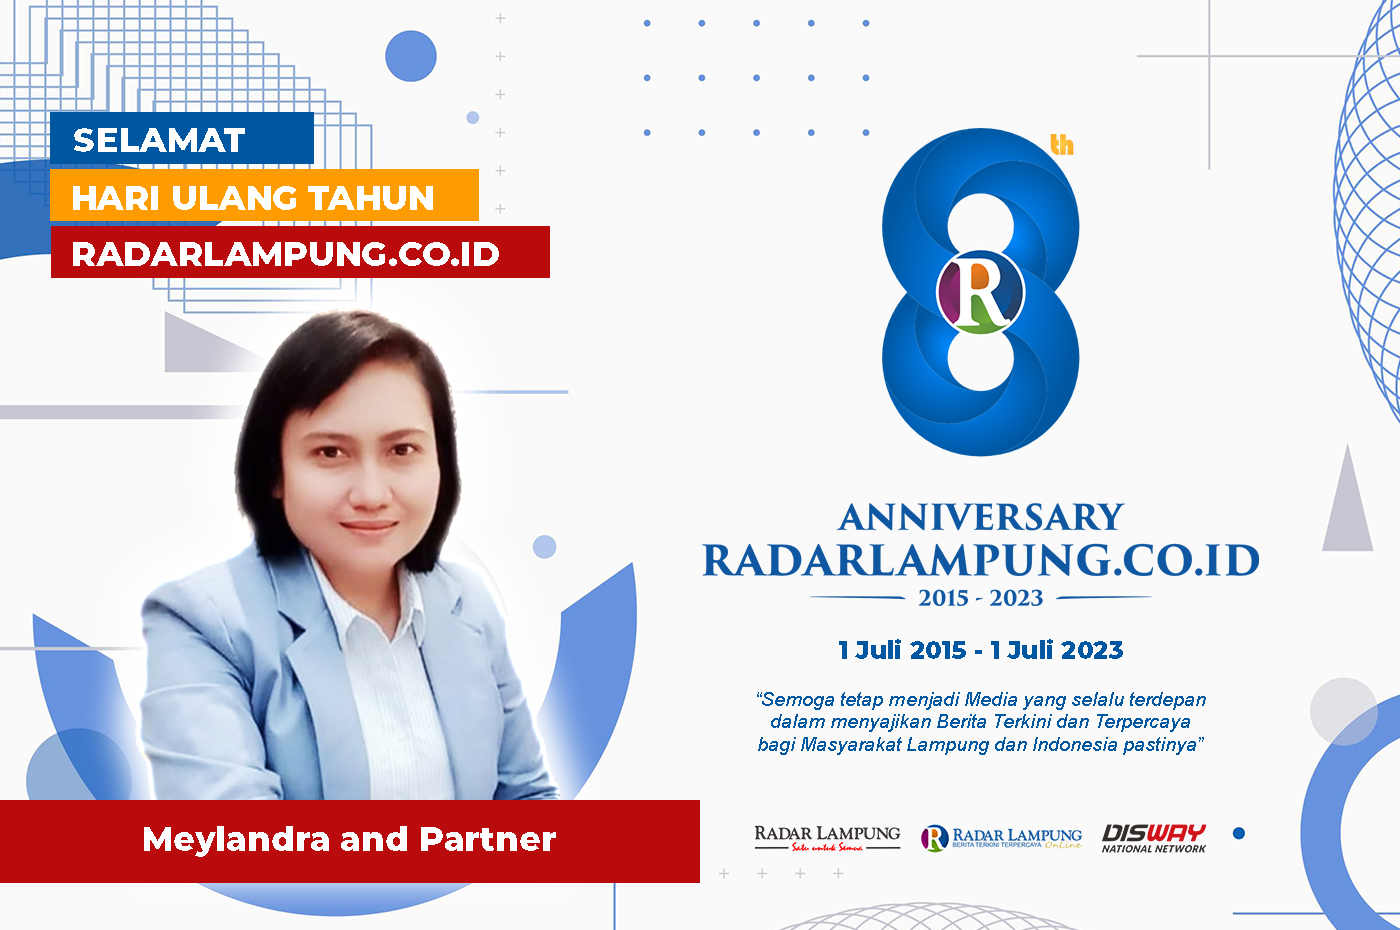 Meylandra and Partner: Selamat Ulang Tahun Radar Lampung Online ke-8